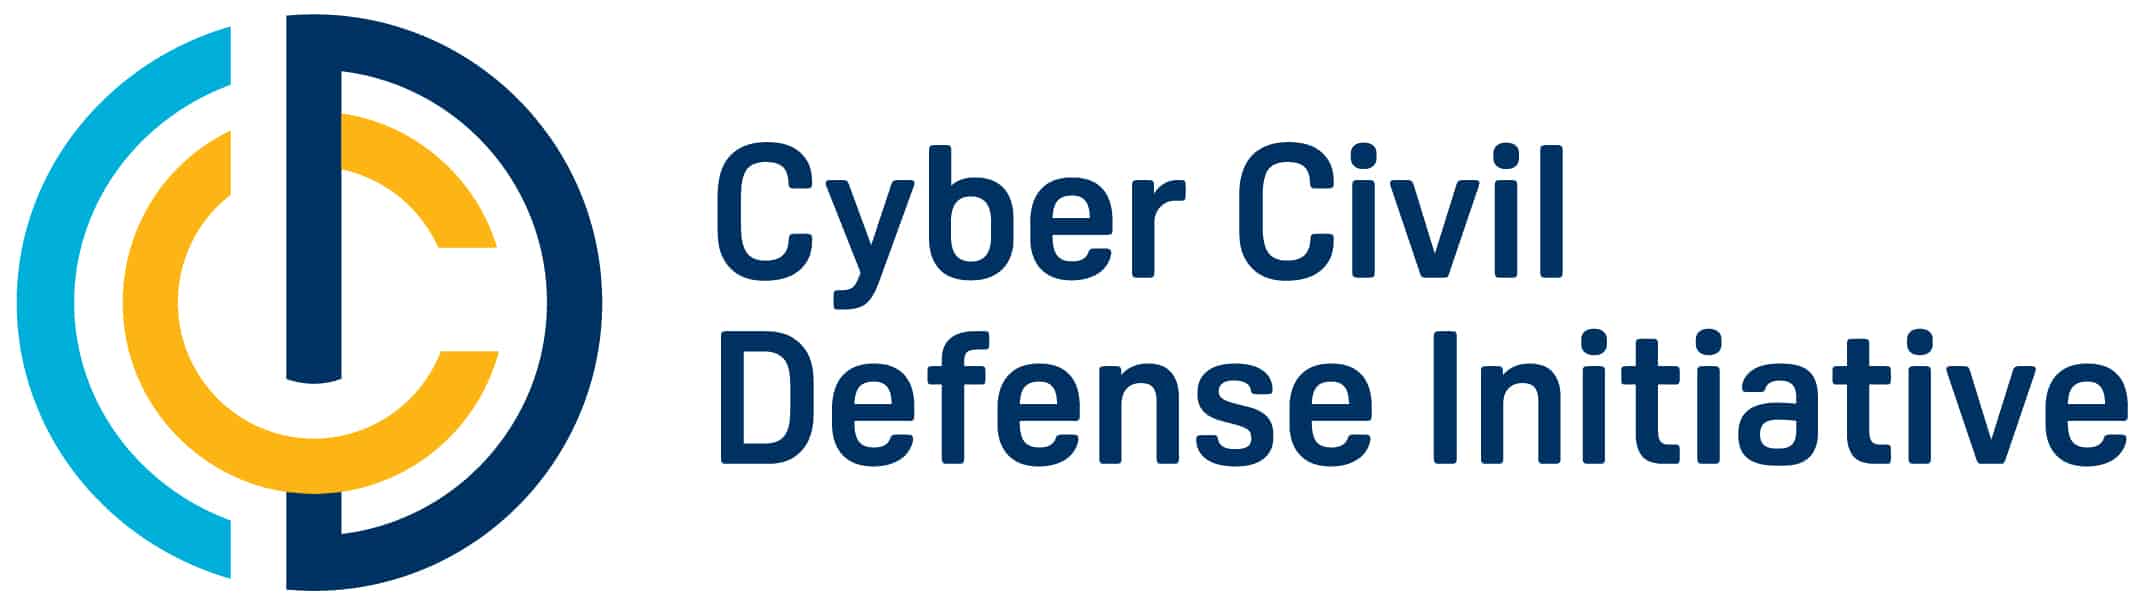 Cyber Civil Defense logo